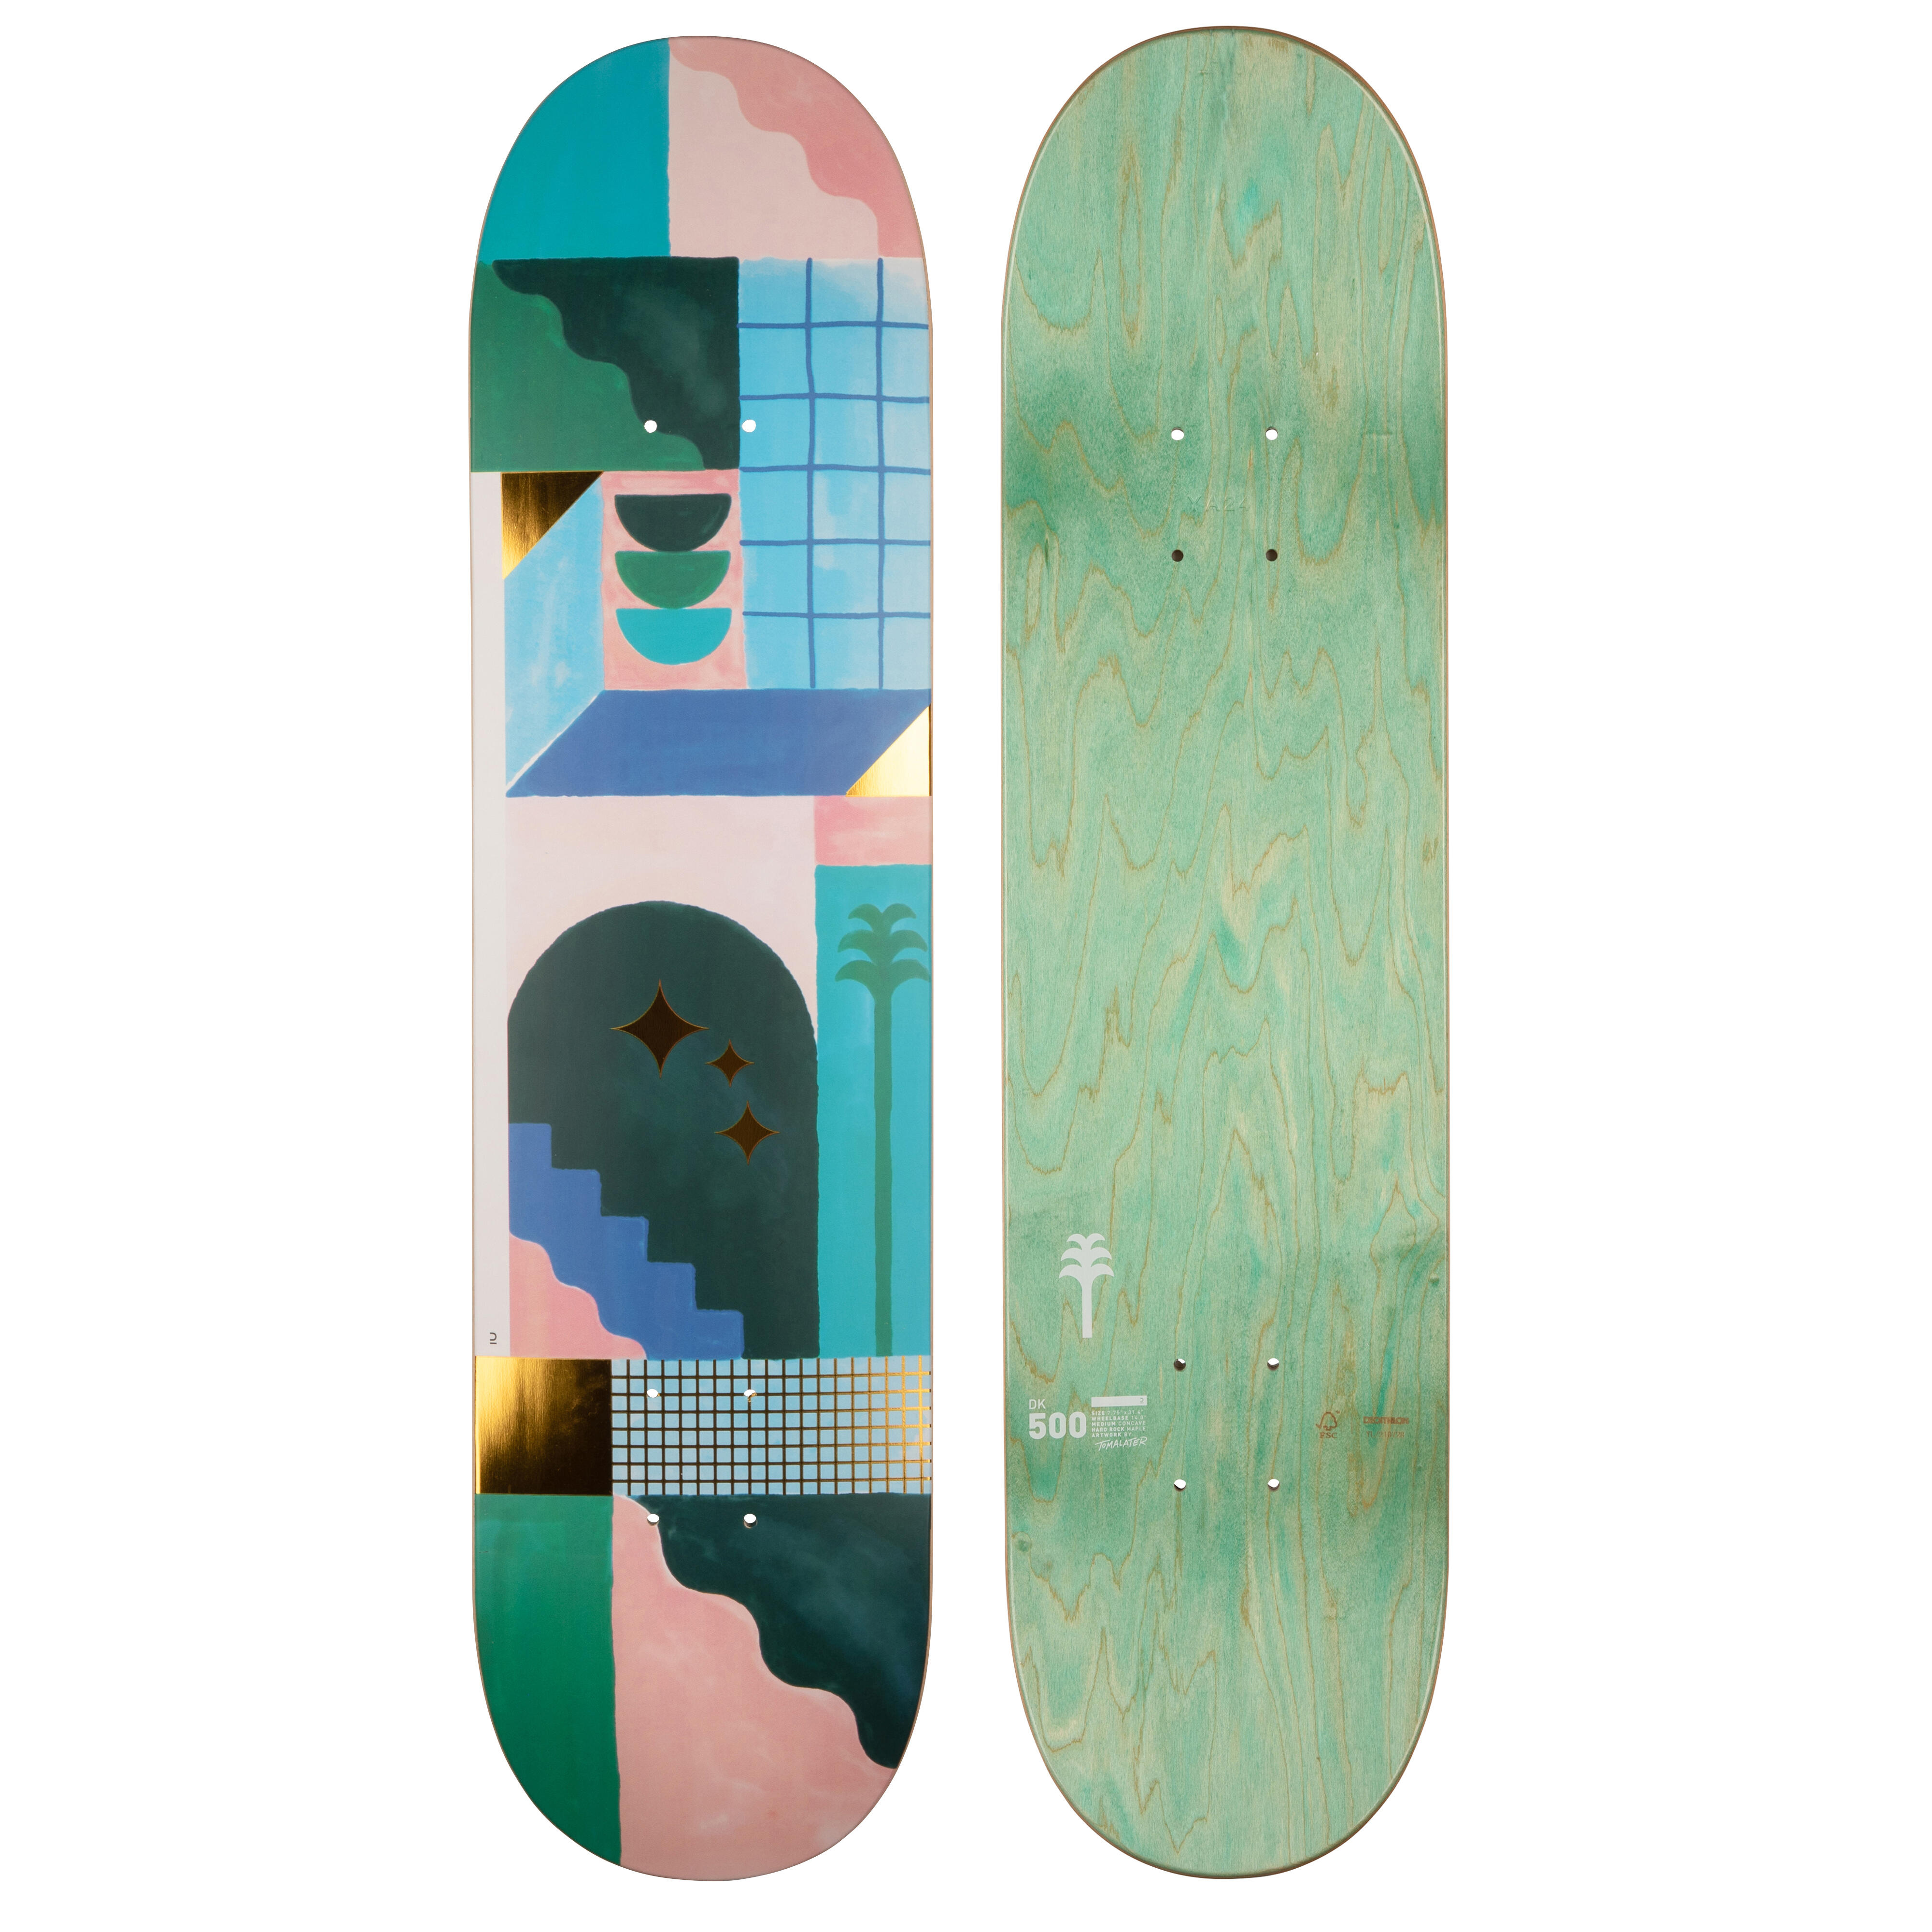 OXELO Skateboard Deck aus Ahornholz DK500 Popsicle Grösse 7,75